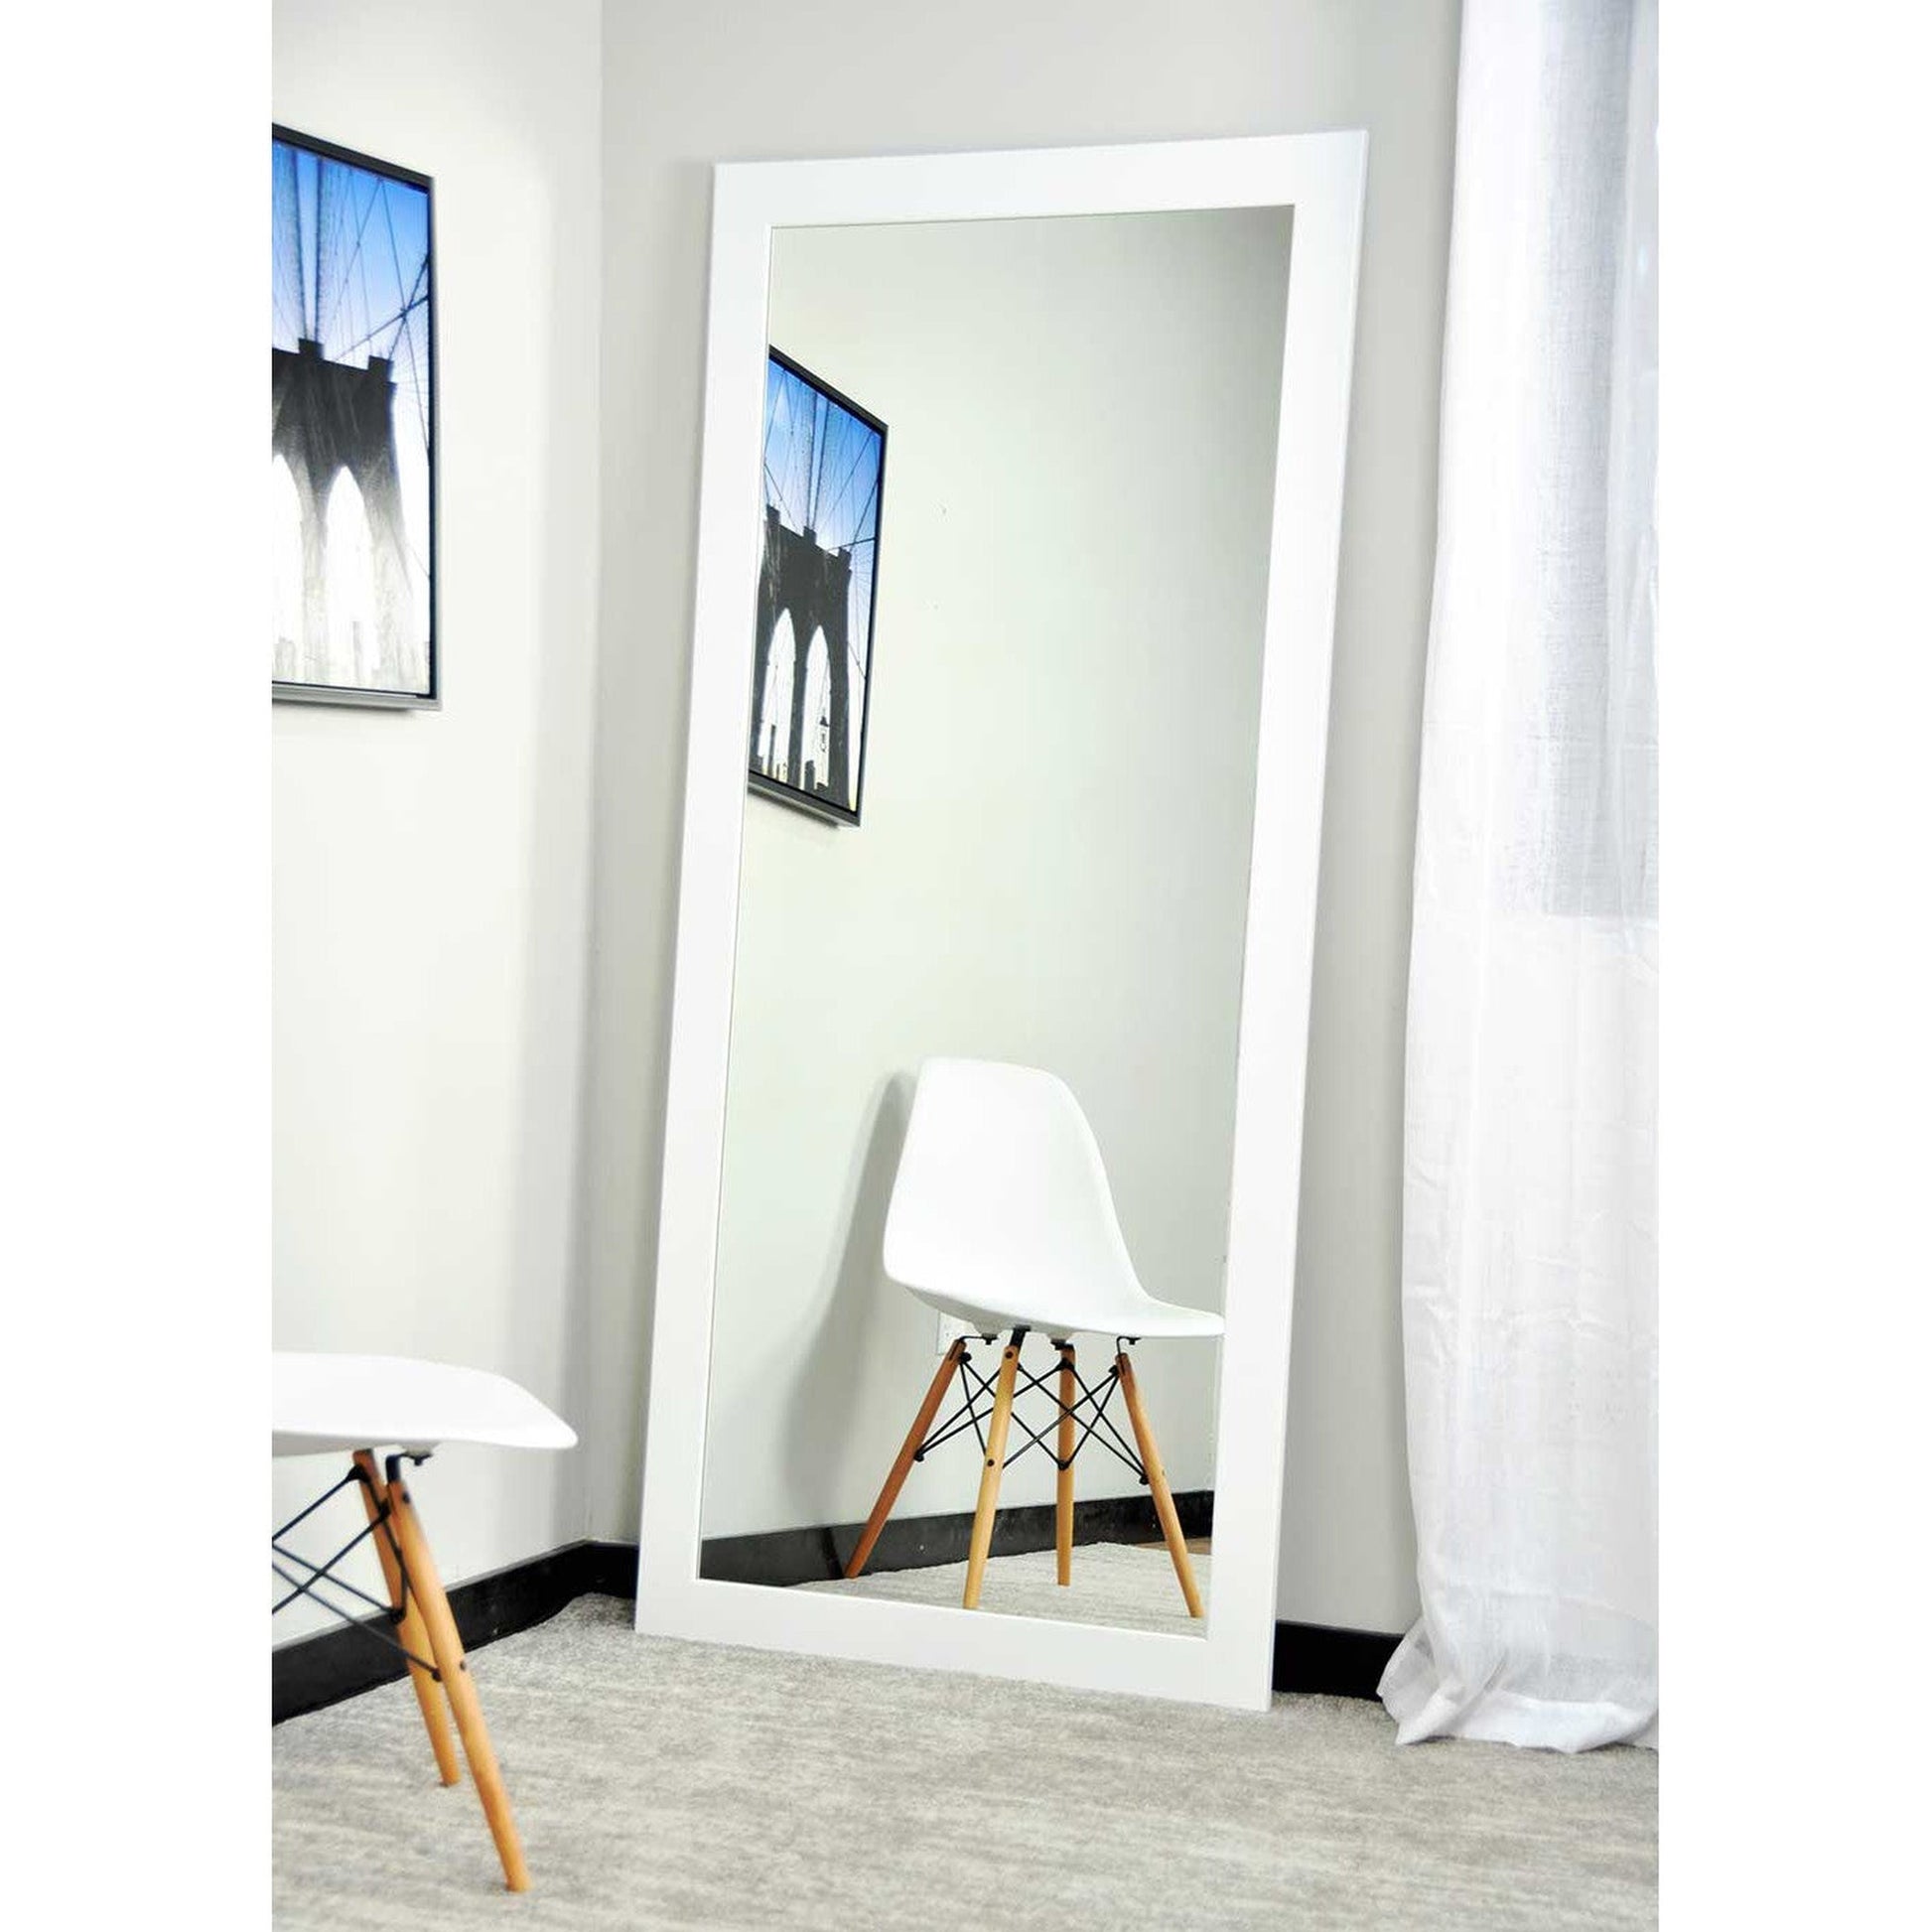 Brandtworks 27" x 55" Pure White Wall Mirror